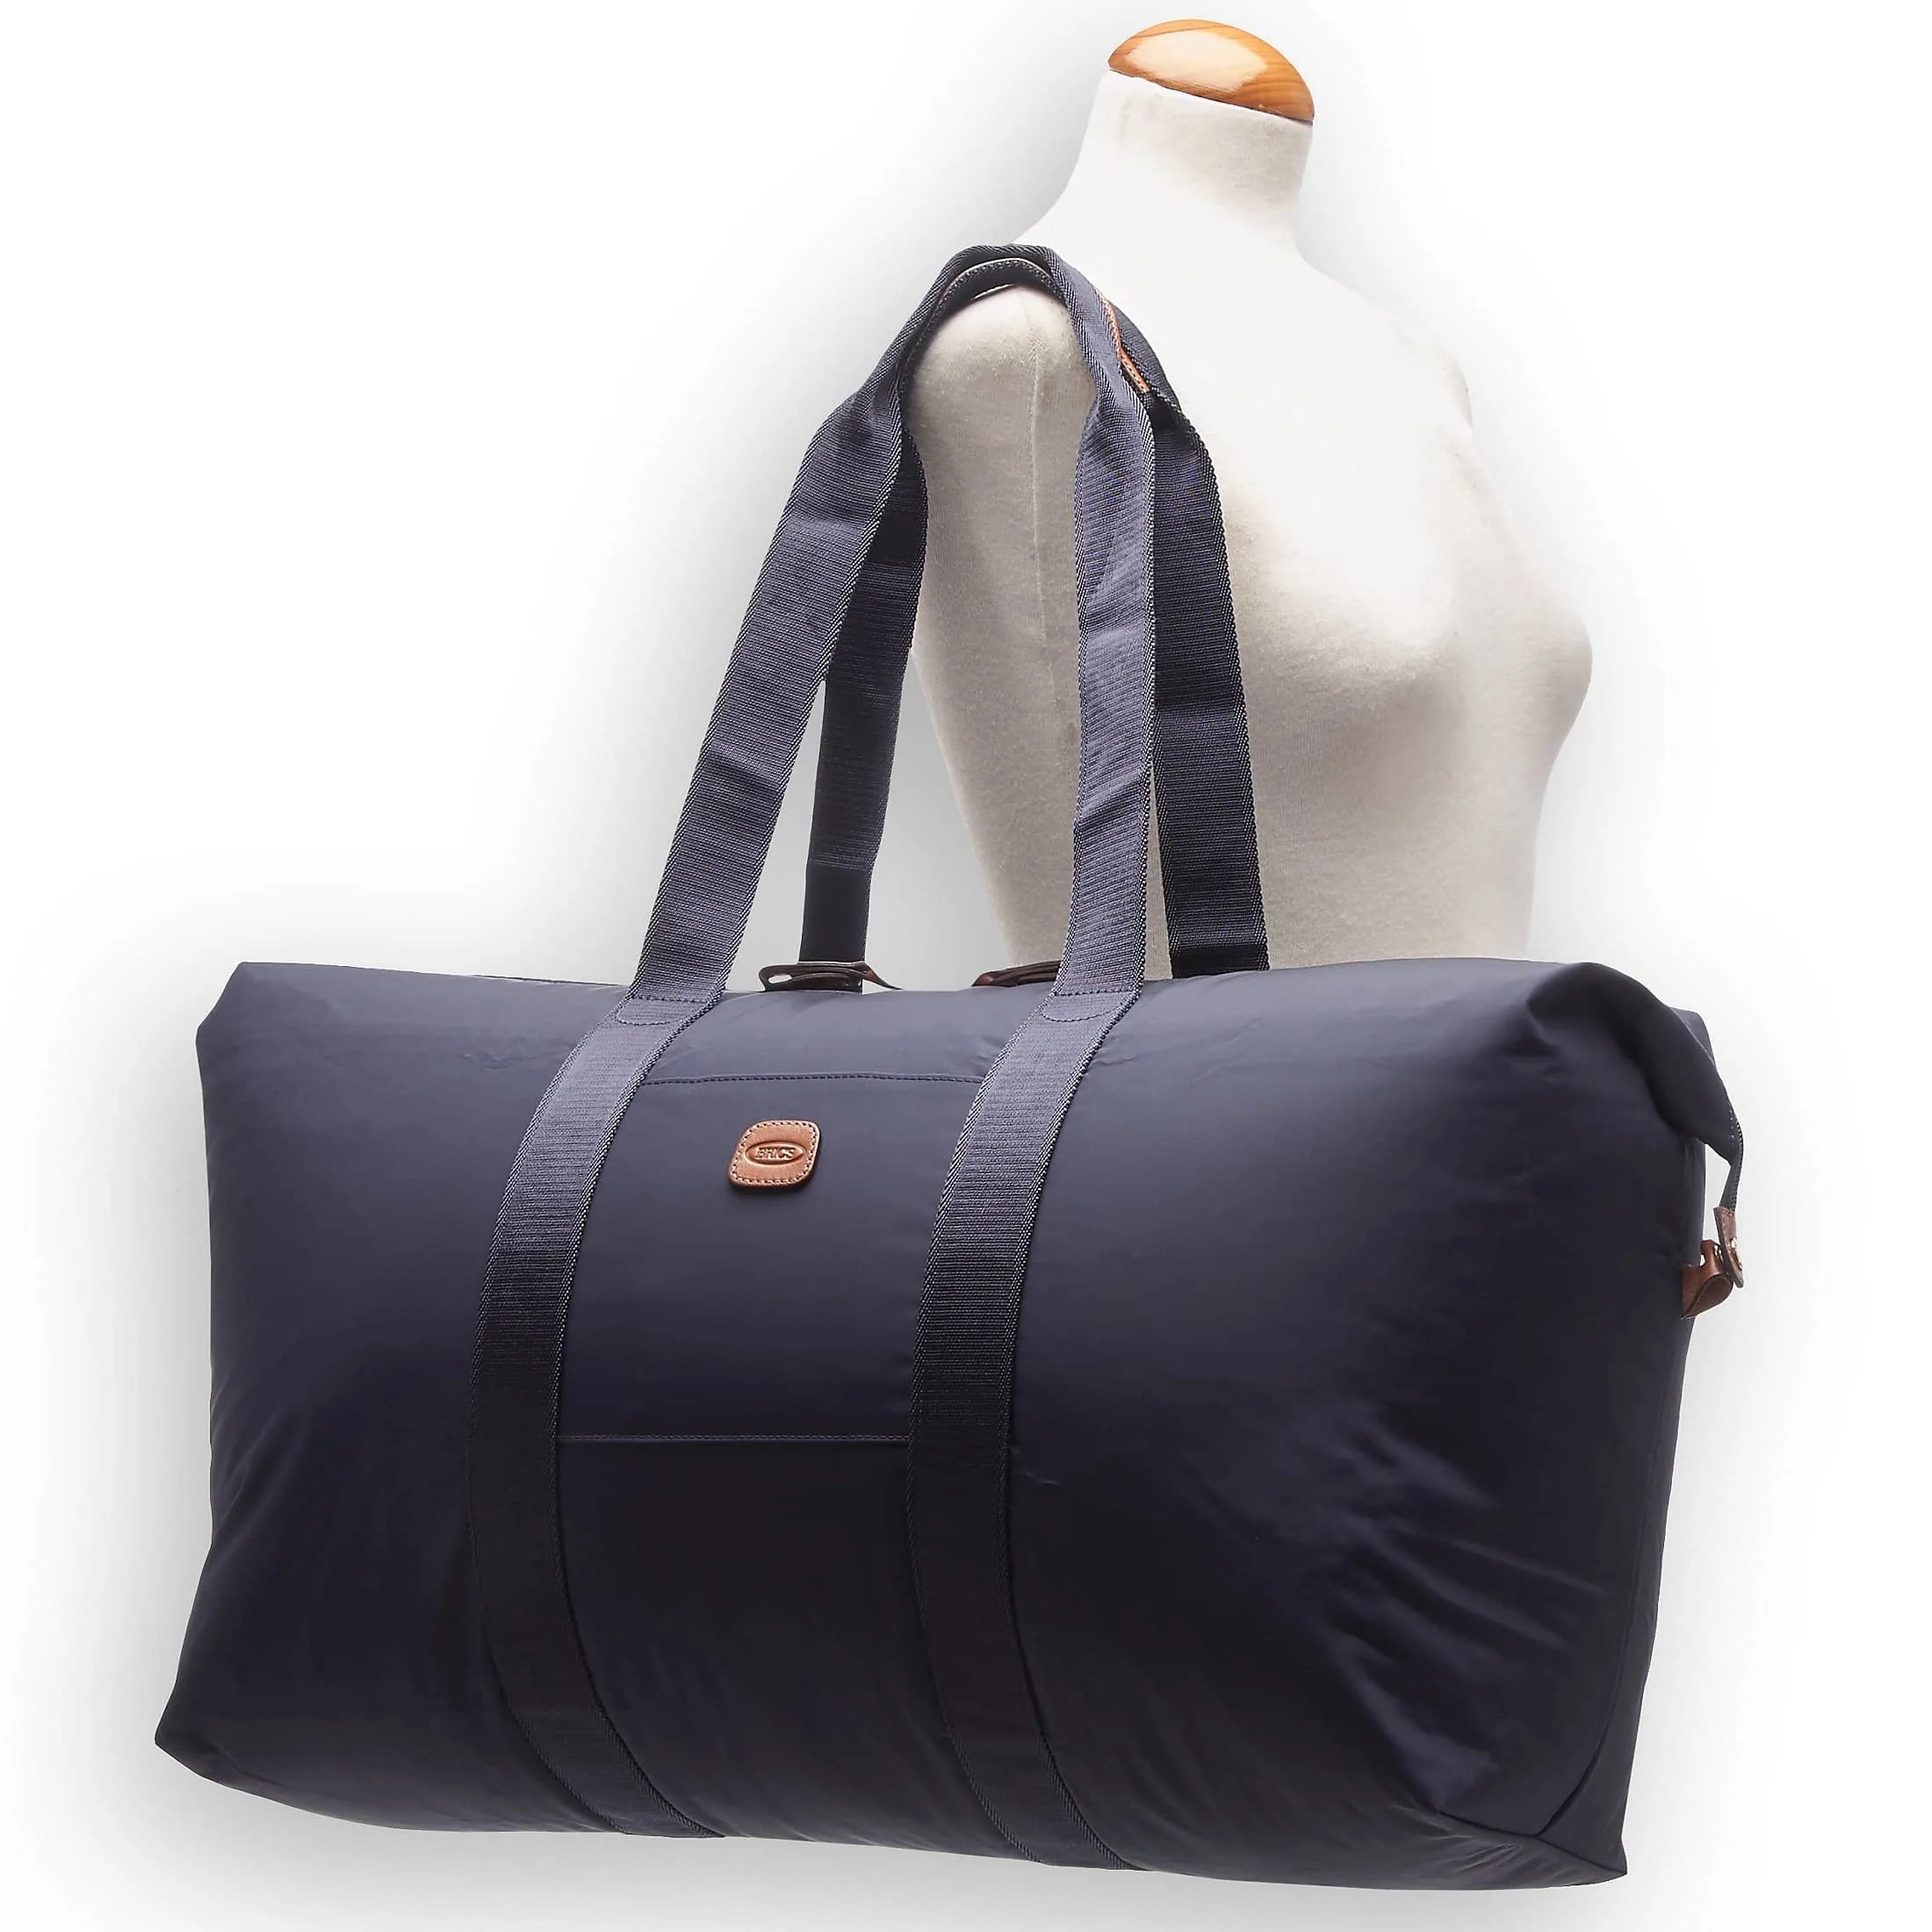 Brics X-Bag travel bag 55 cm - beige